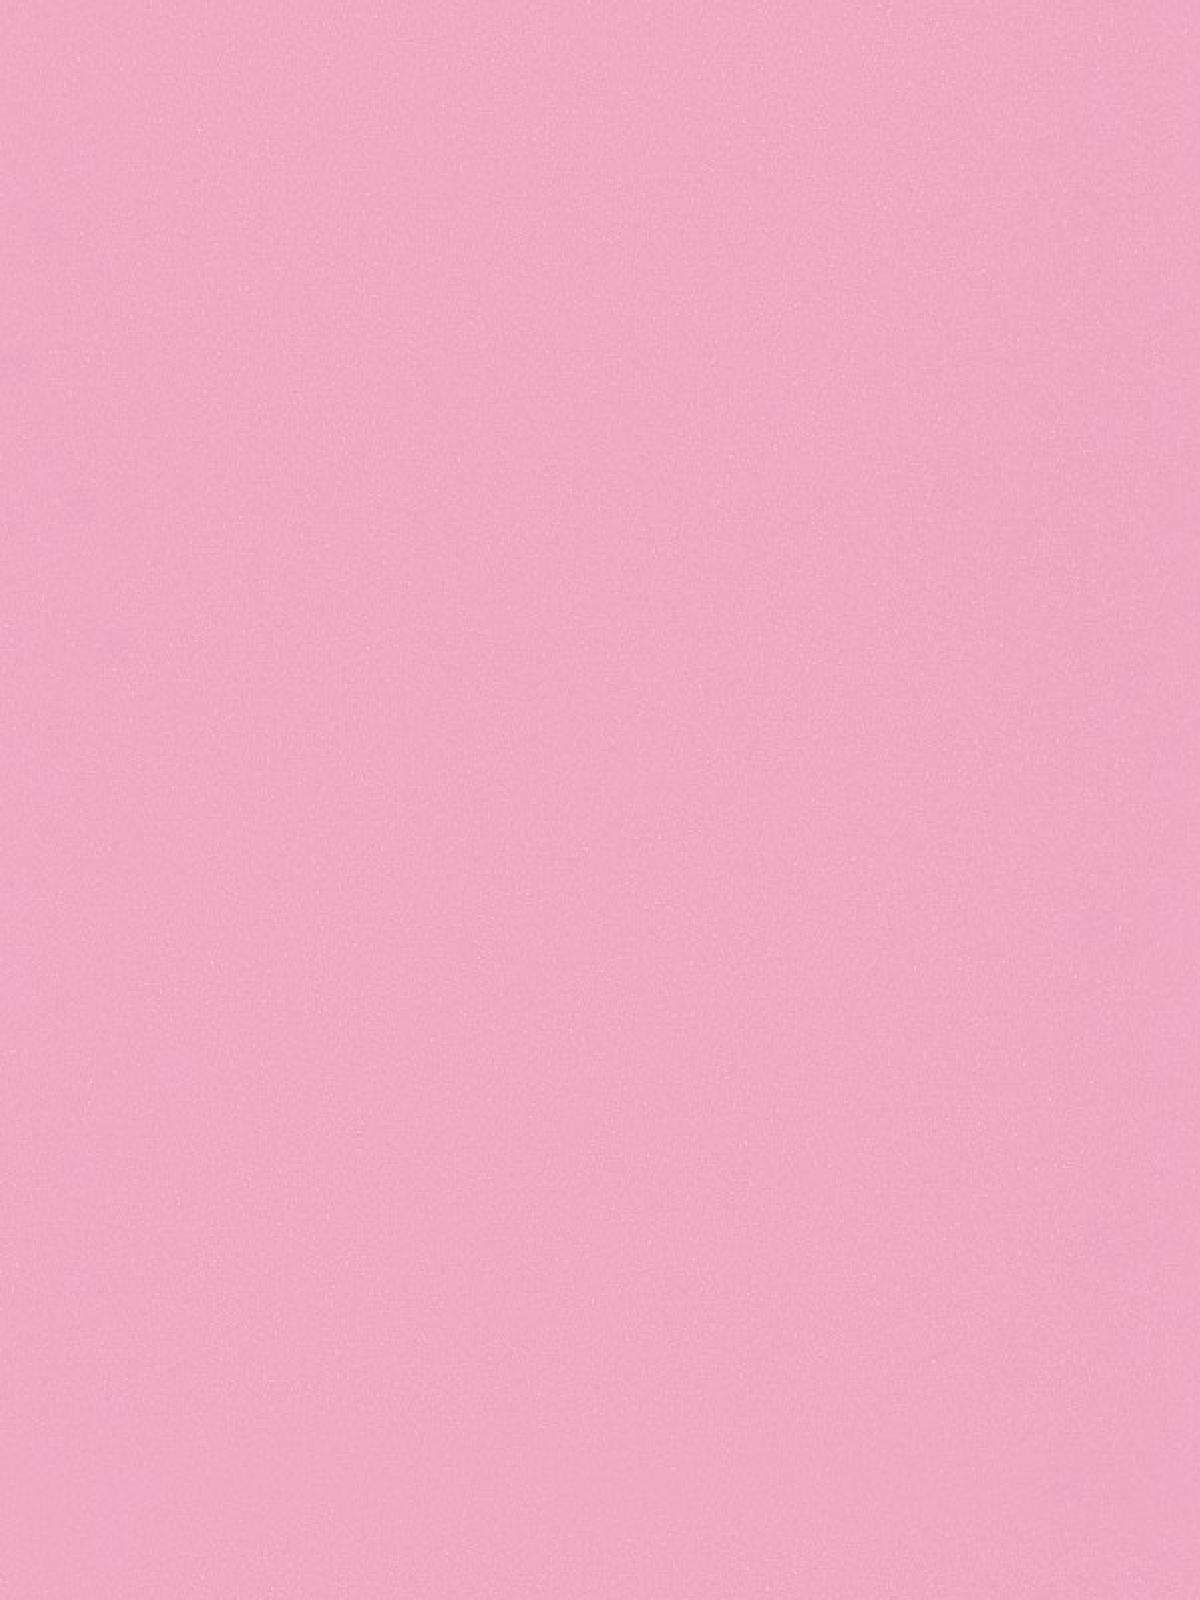 baby pink wallpaper #17